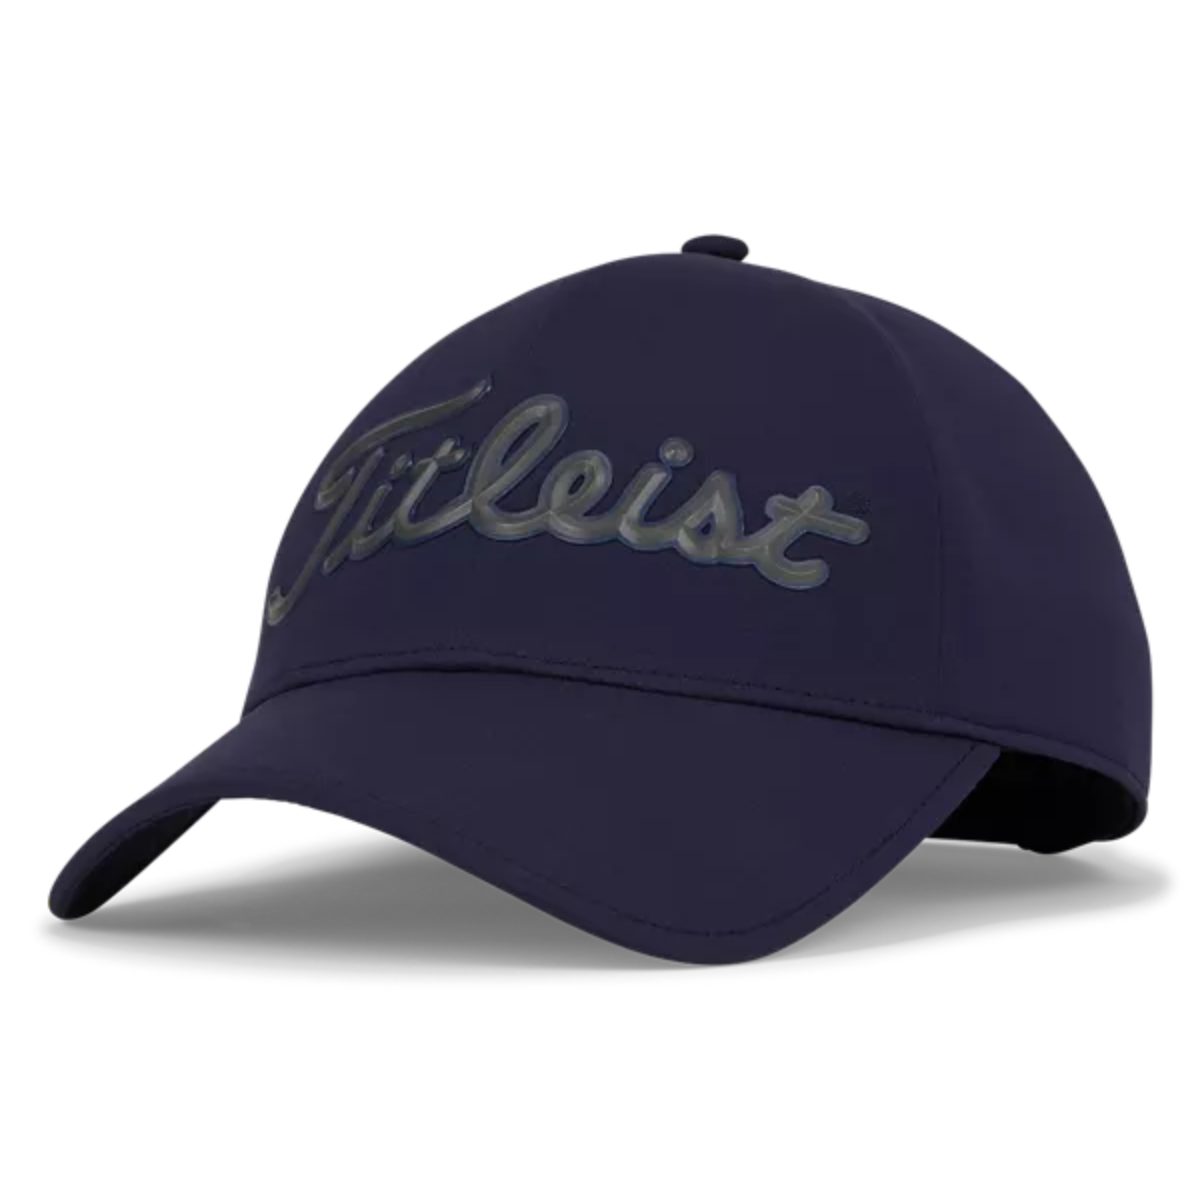 Titleist Players StaDry Adjustable cap